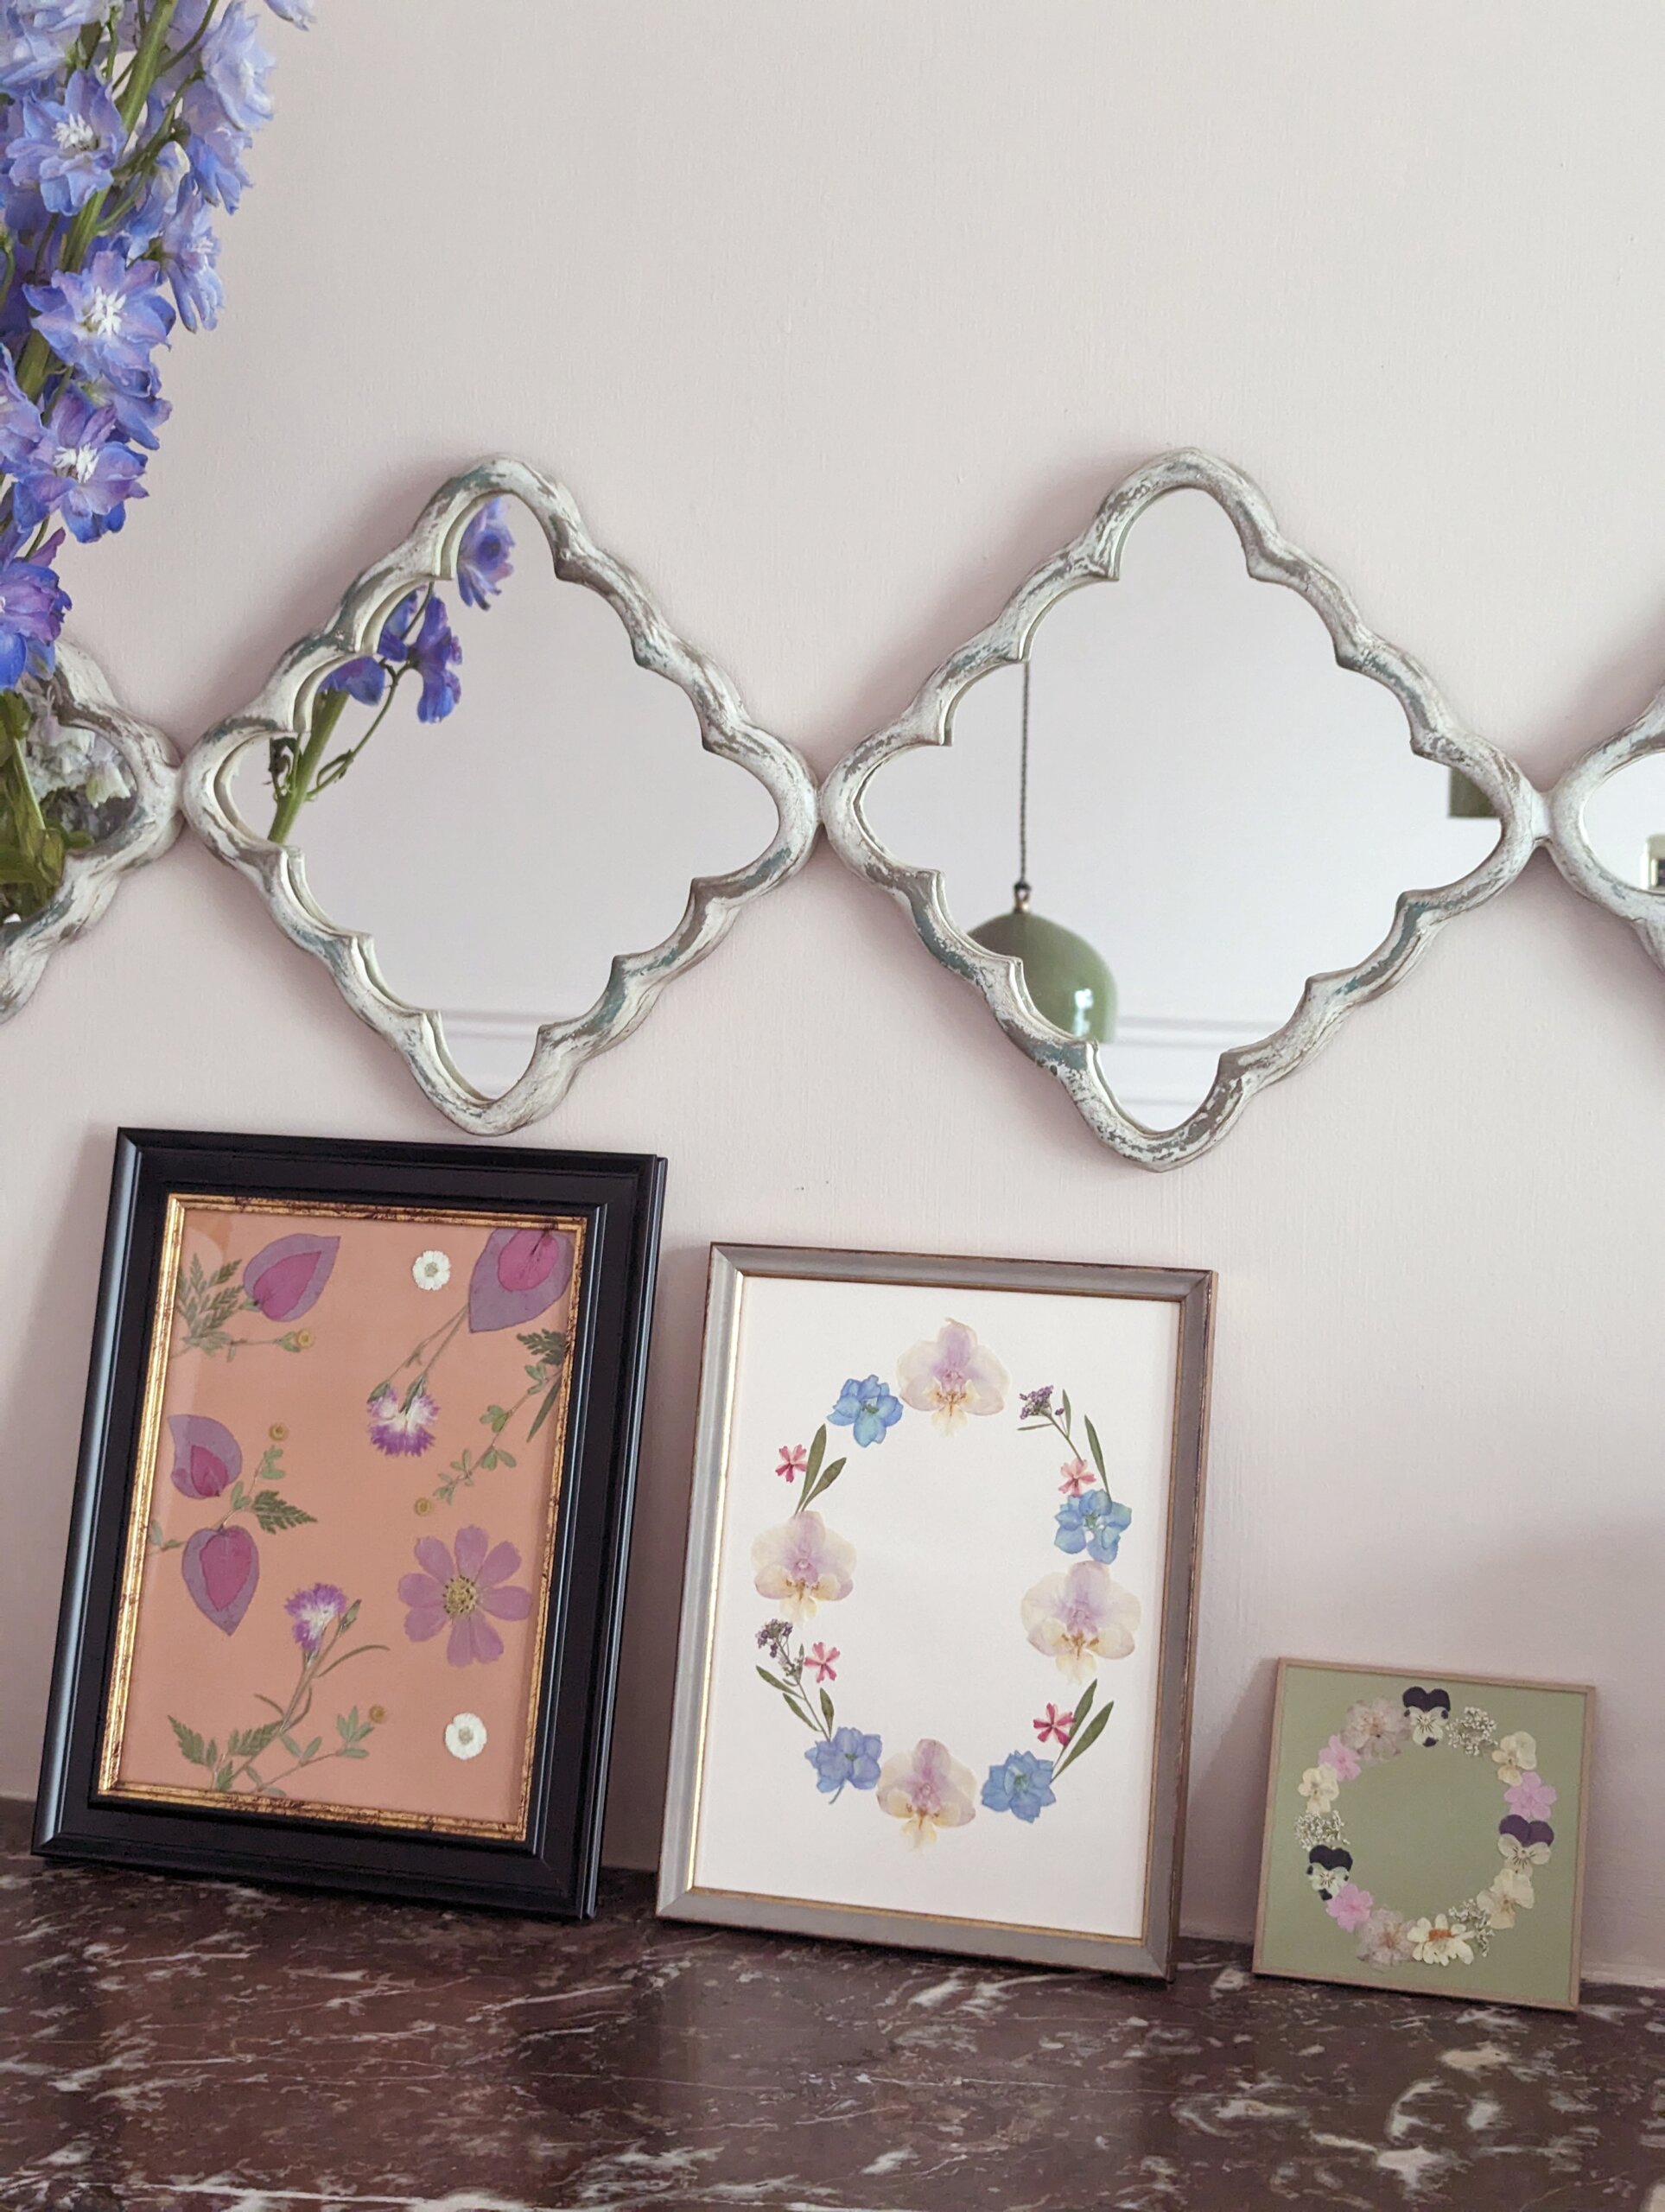 3 frames with pressed flowers artworks